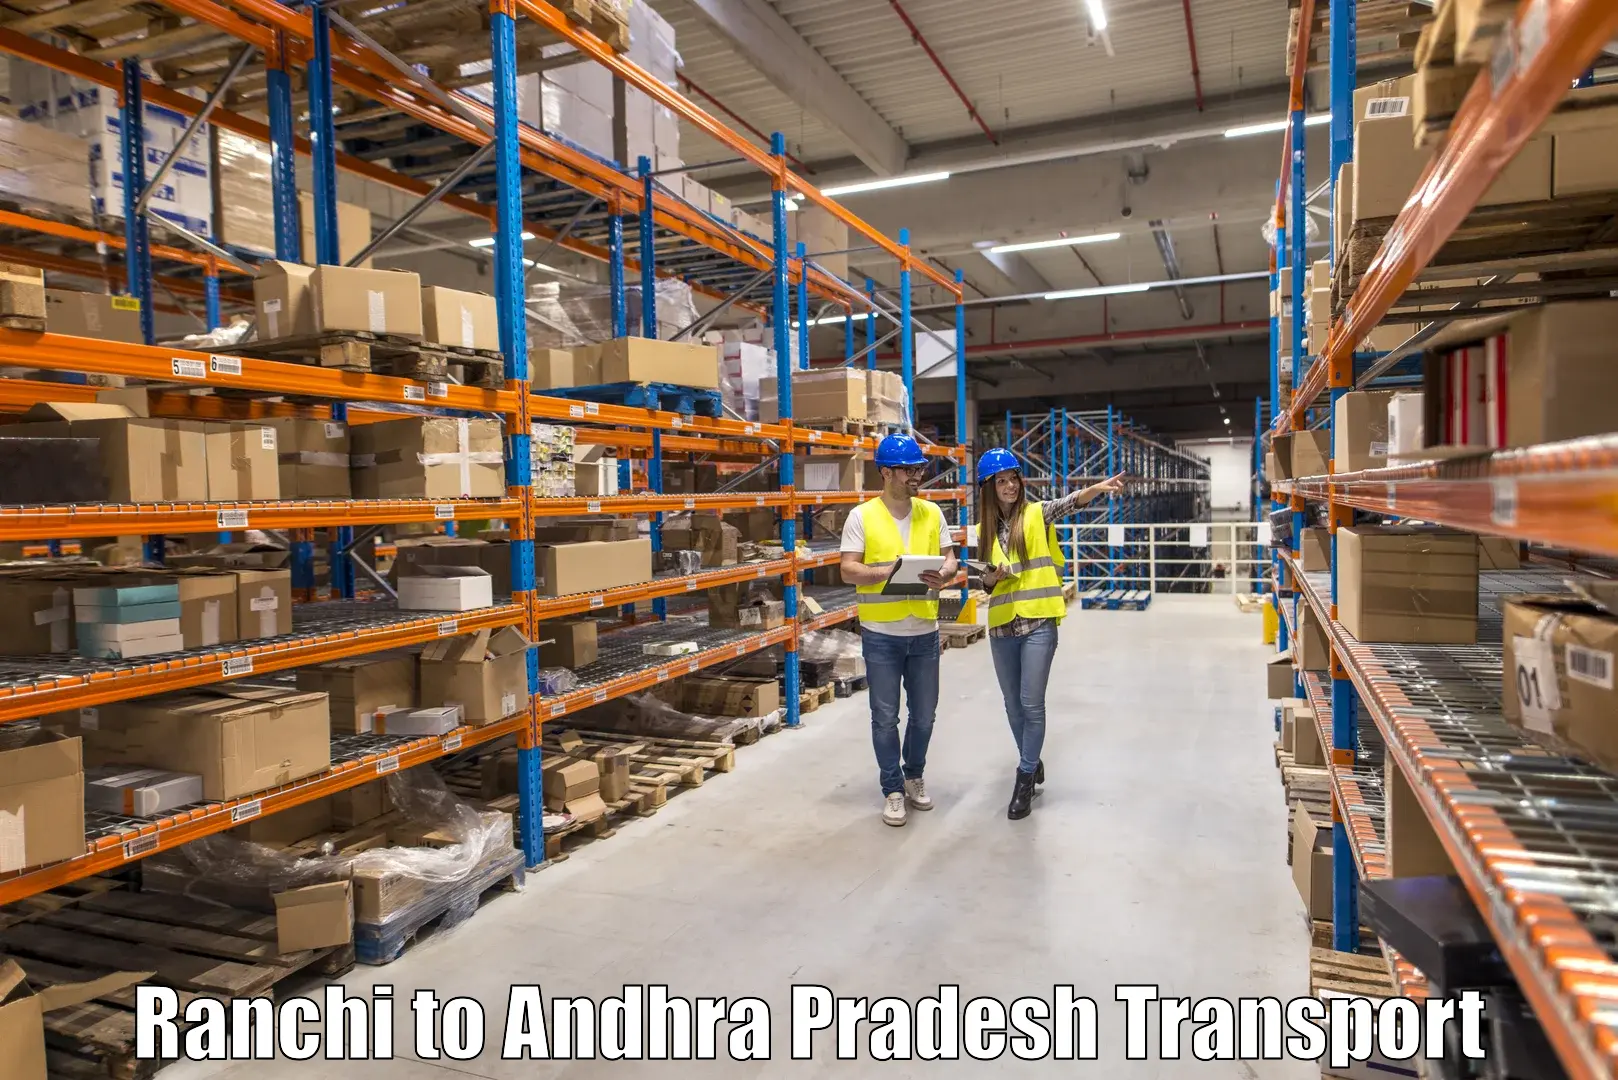 Express transport services Ranchi to Chodavaram